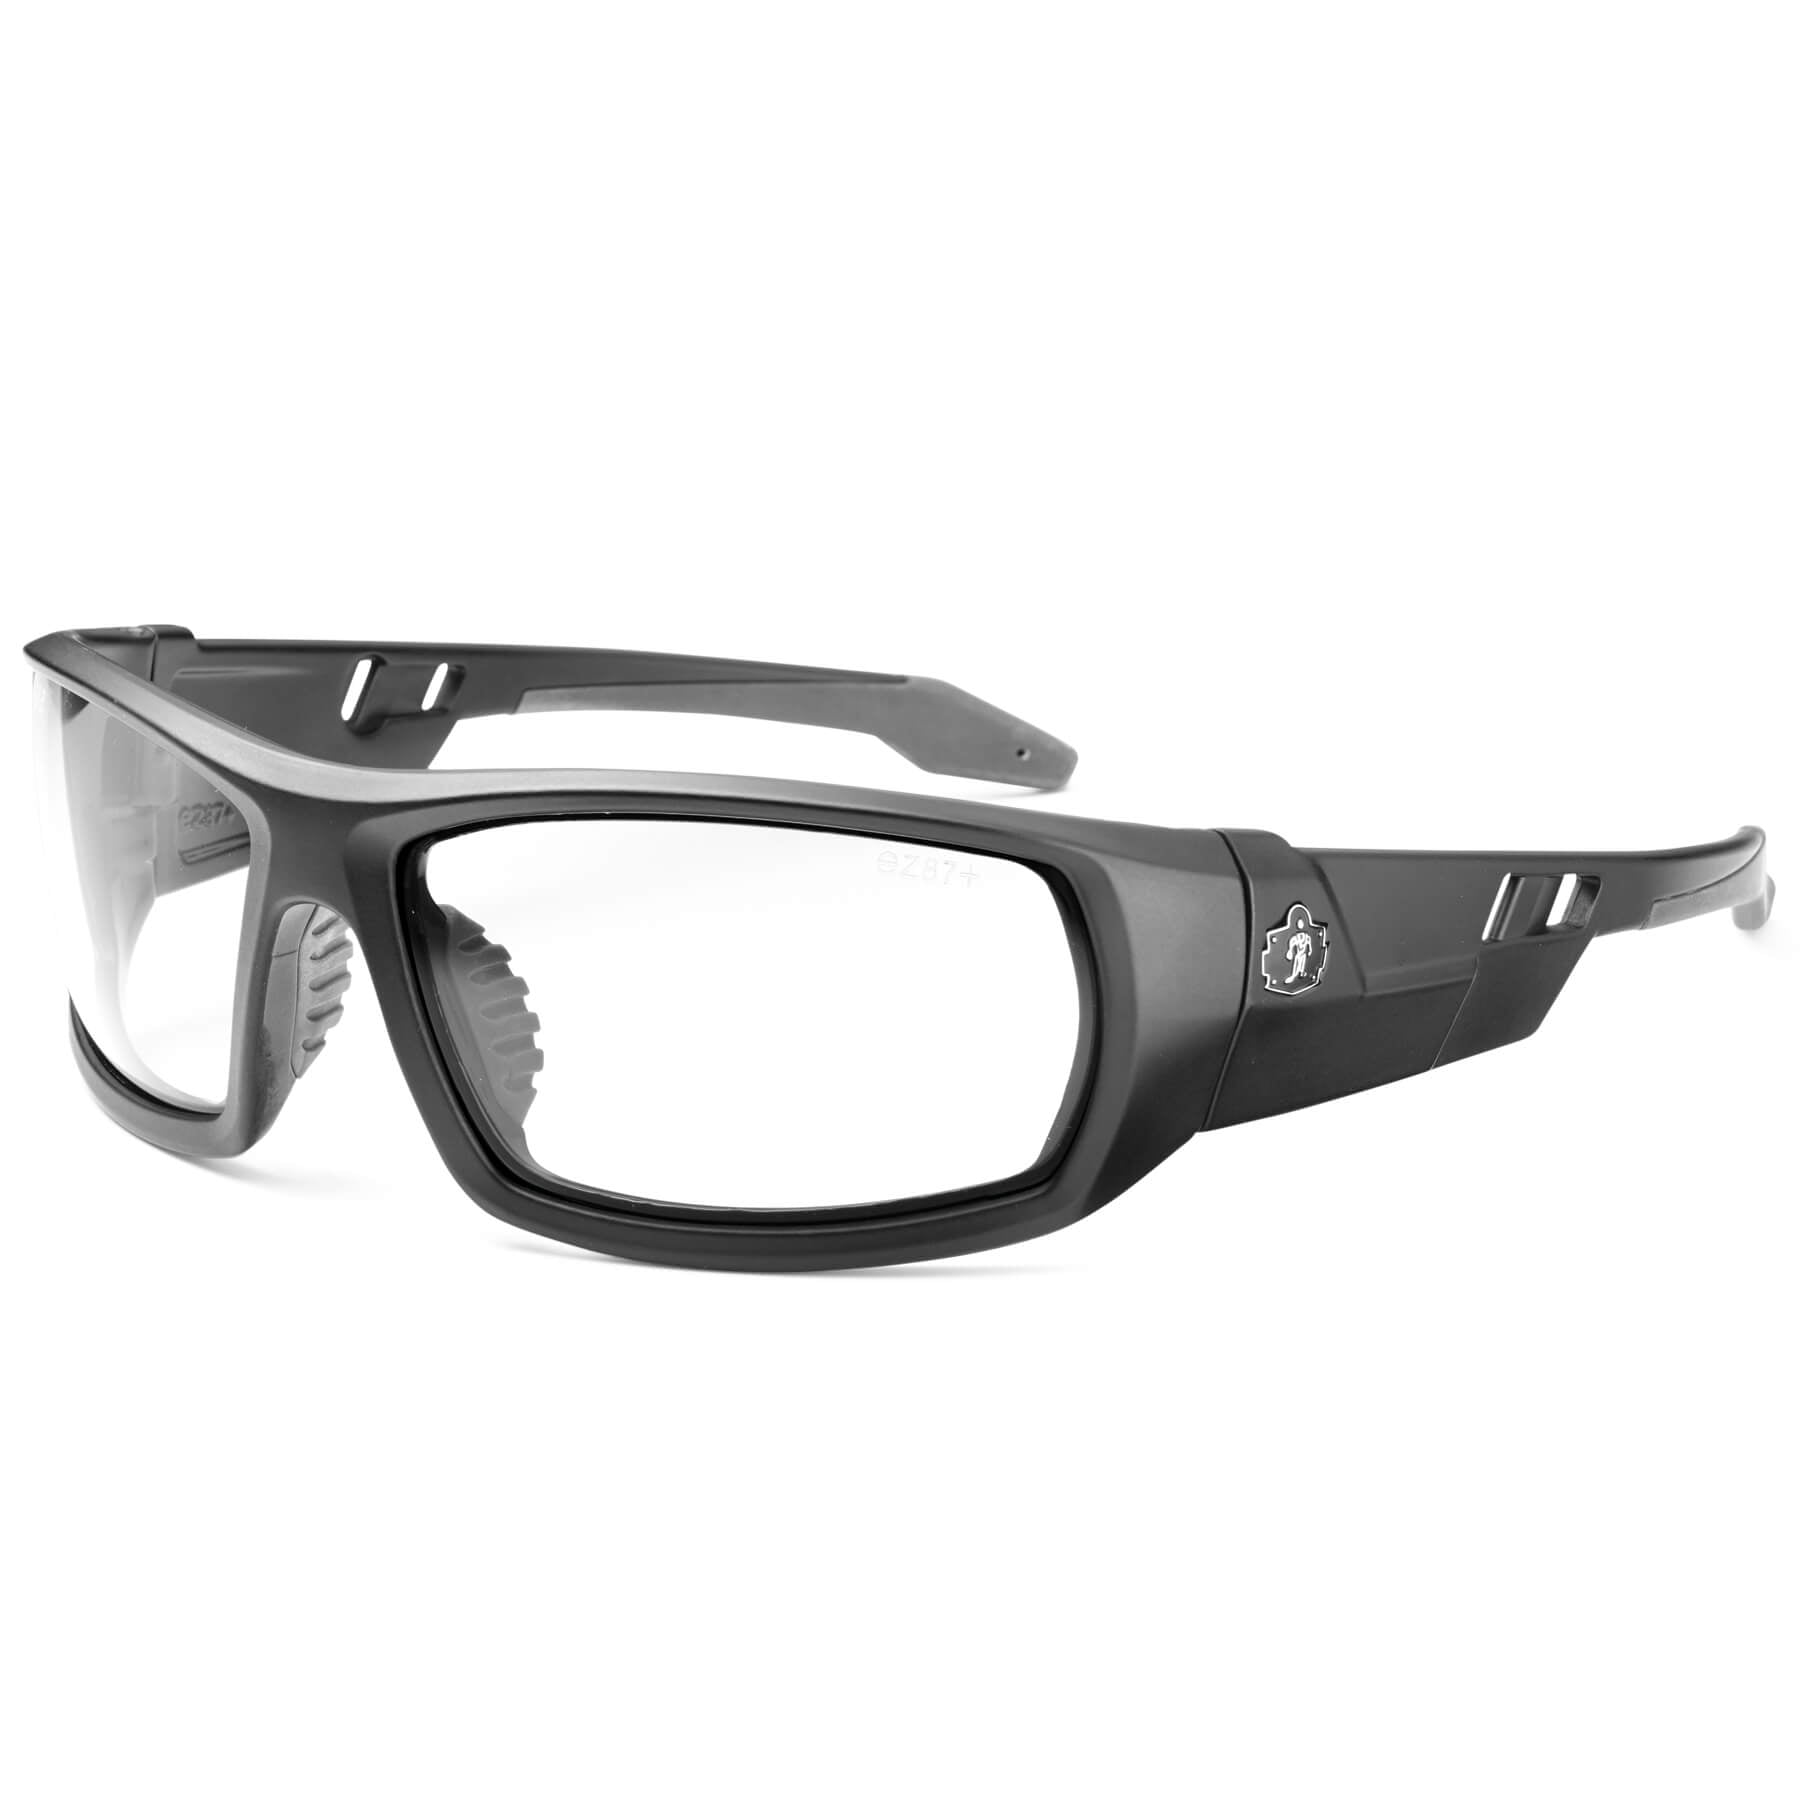 Skullerz® Odin Safety Glasses Clear with Fog-Off